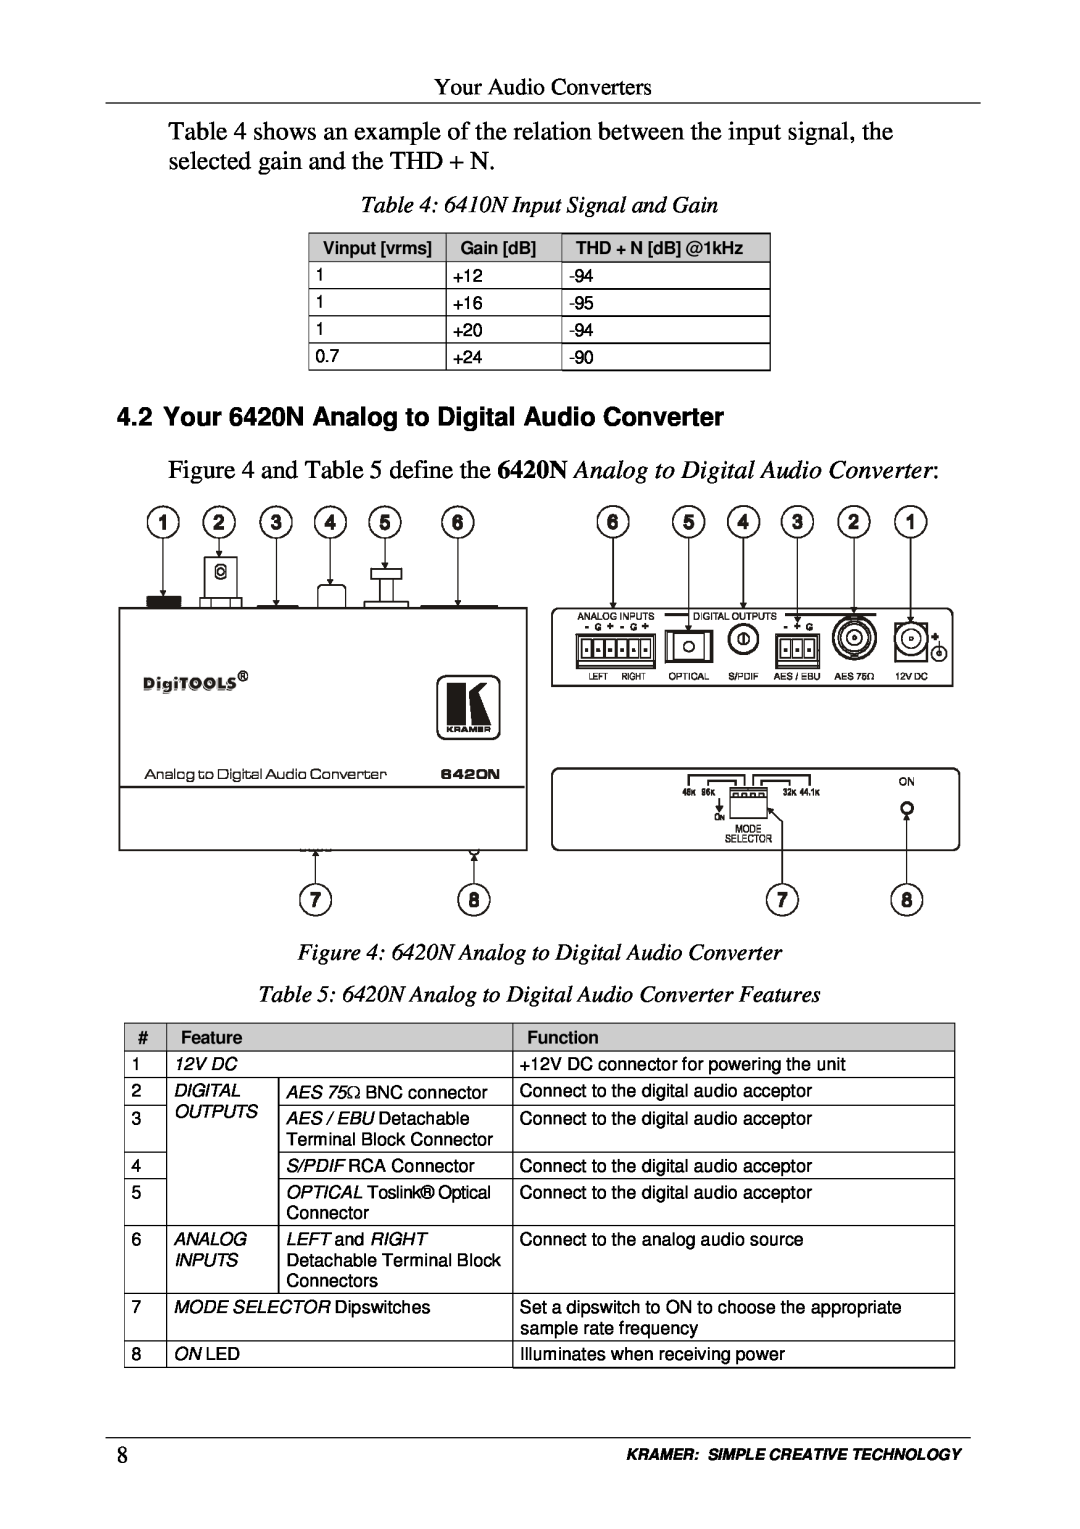 Kramer Electronics user manual GECAi U, 6410N Input Signal and Gain, 6420N Analog to Digital Audio Converter 